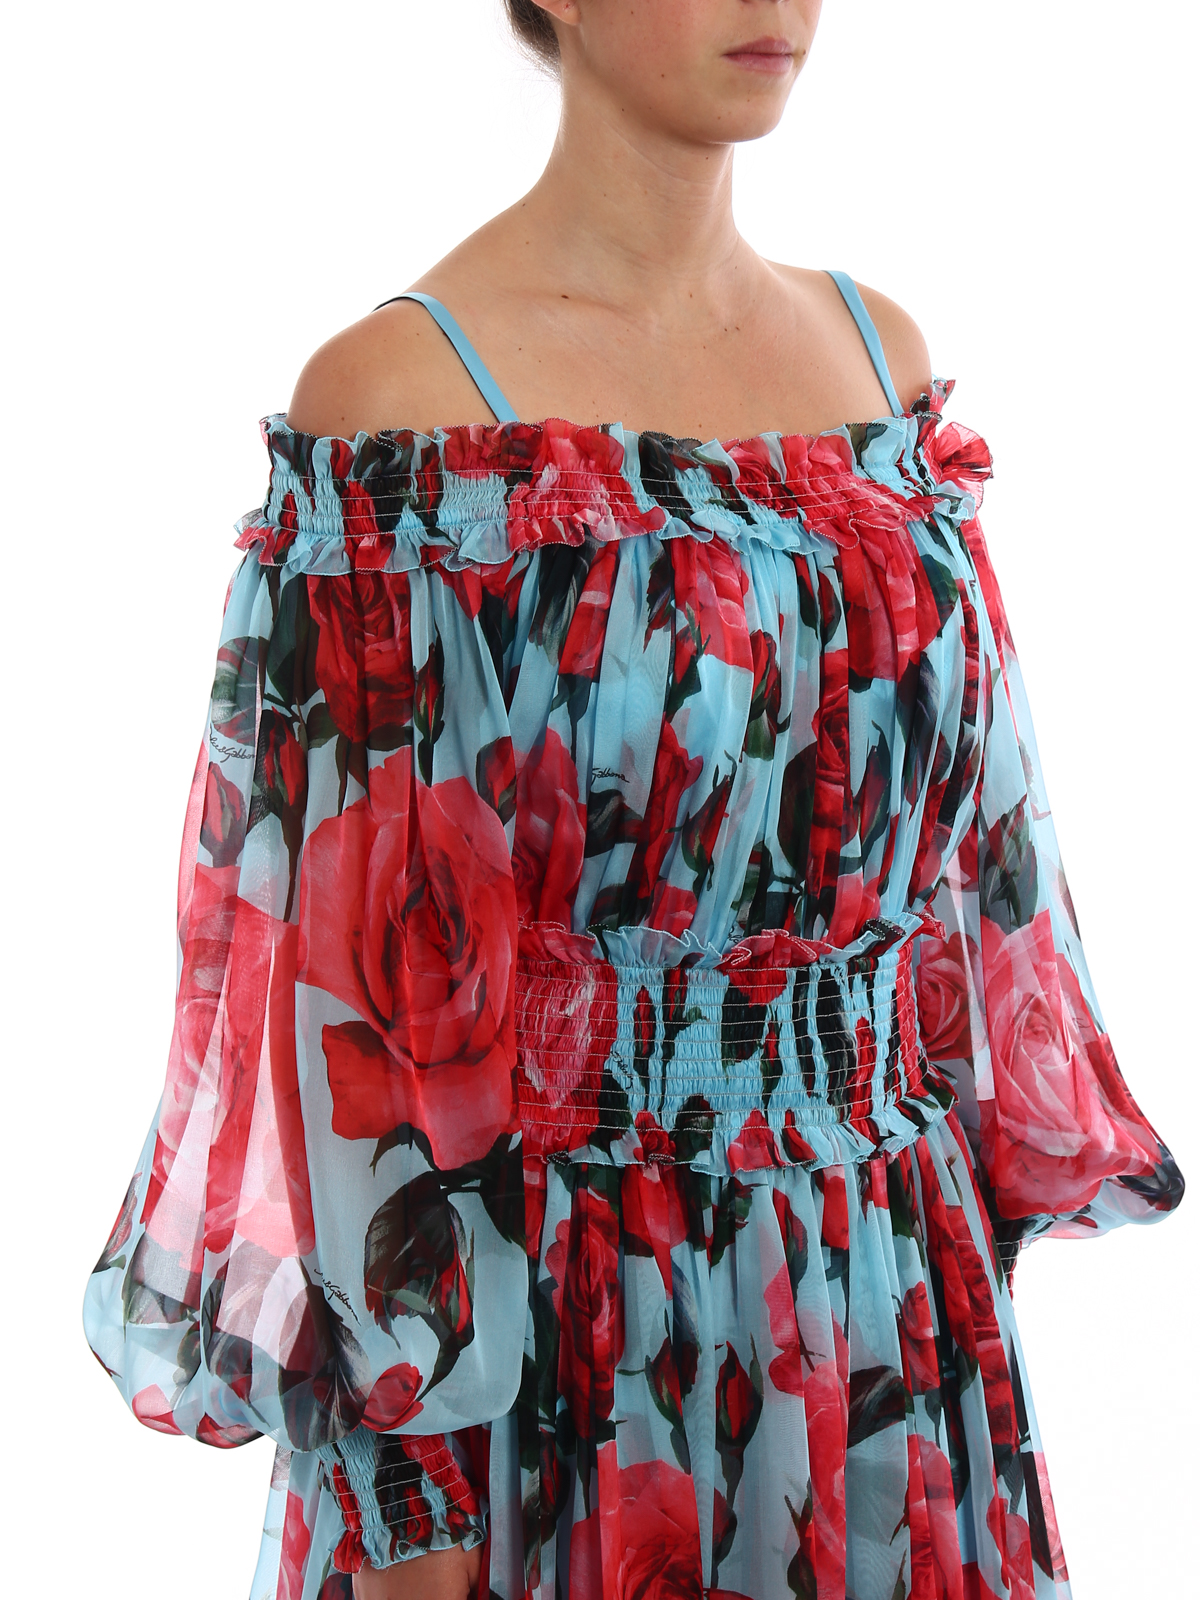 Romantic floral silk chiffon dress 